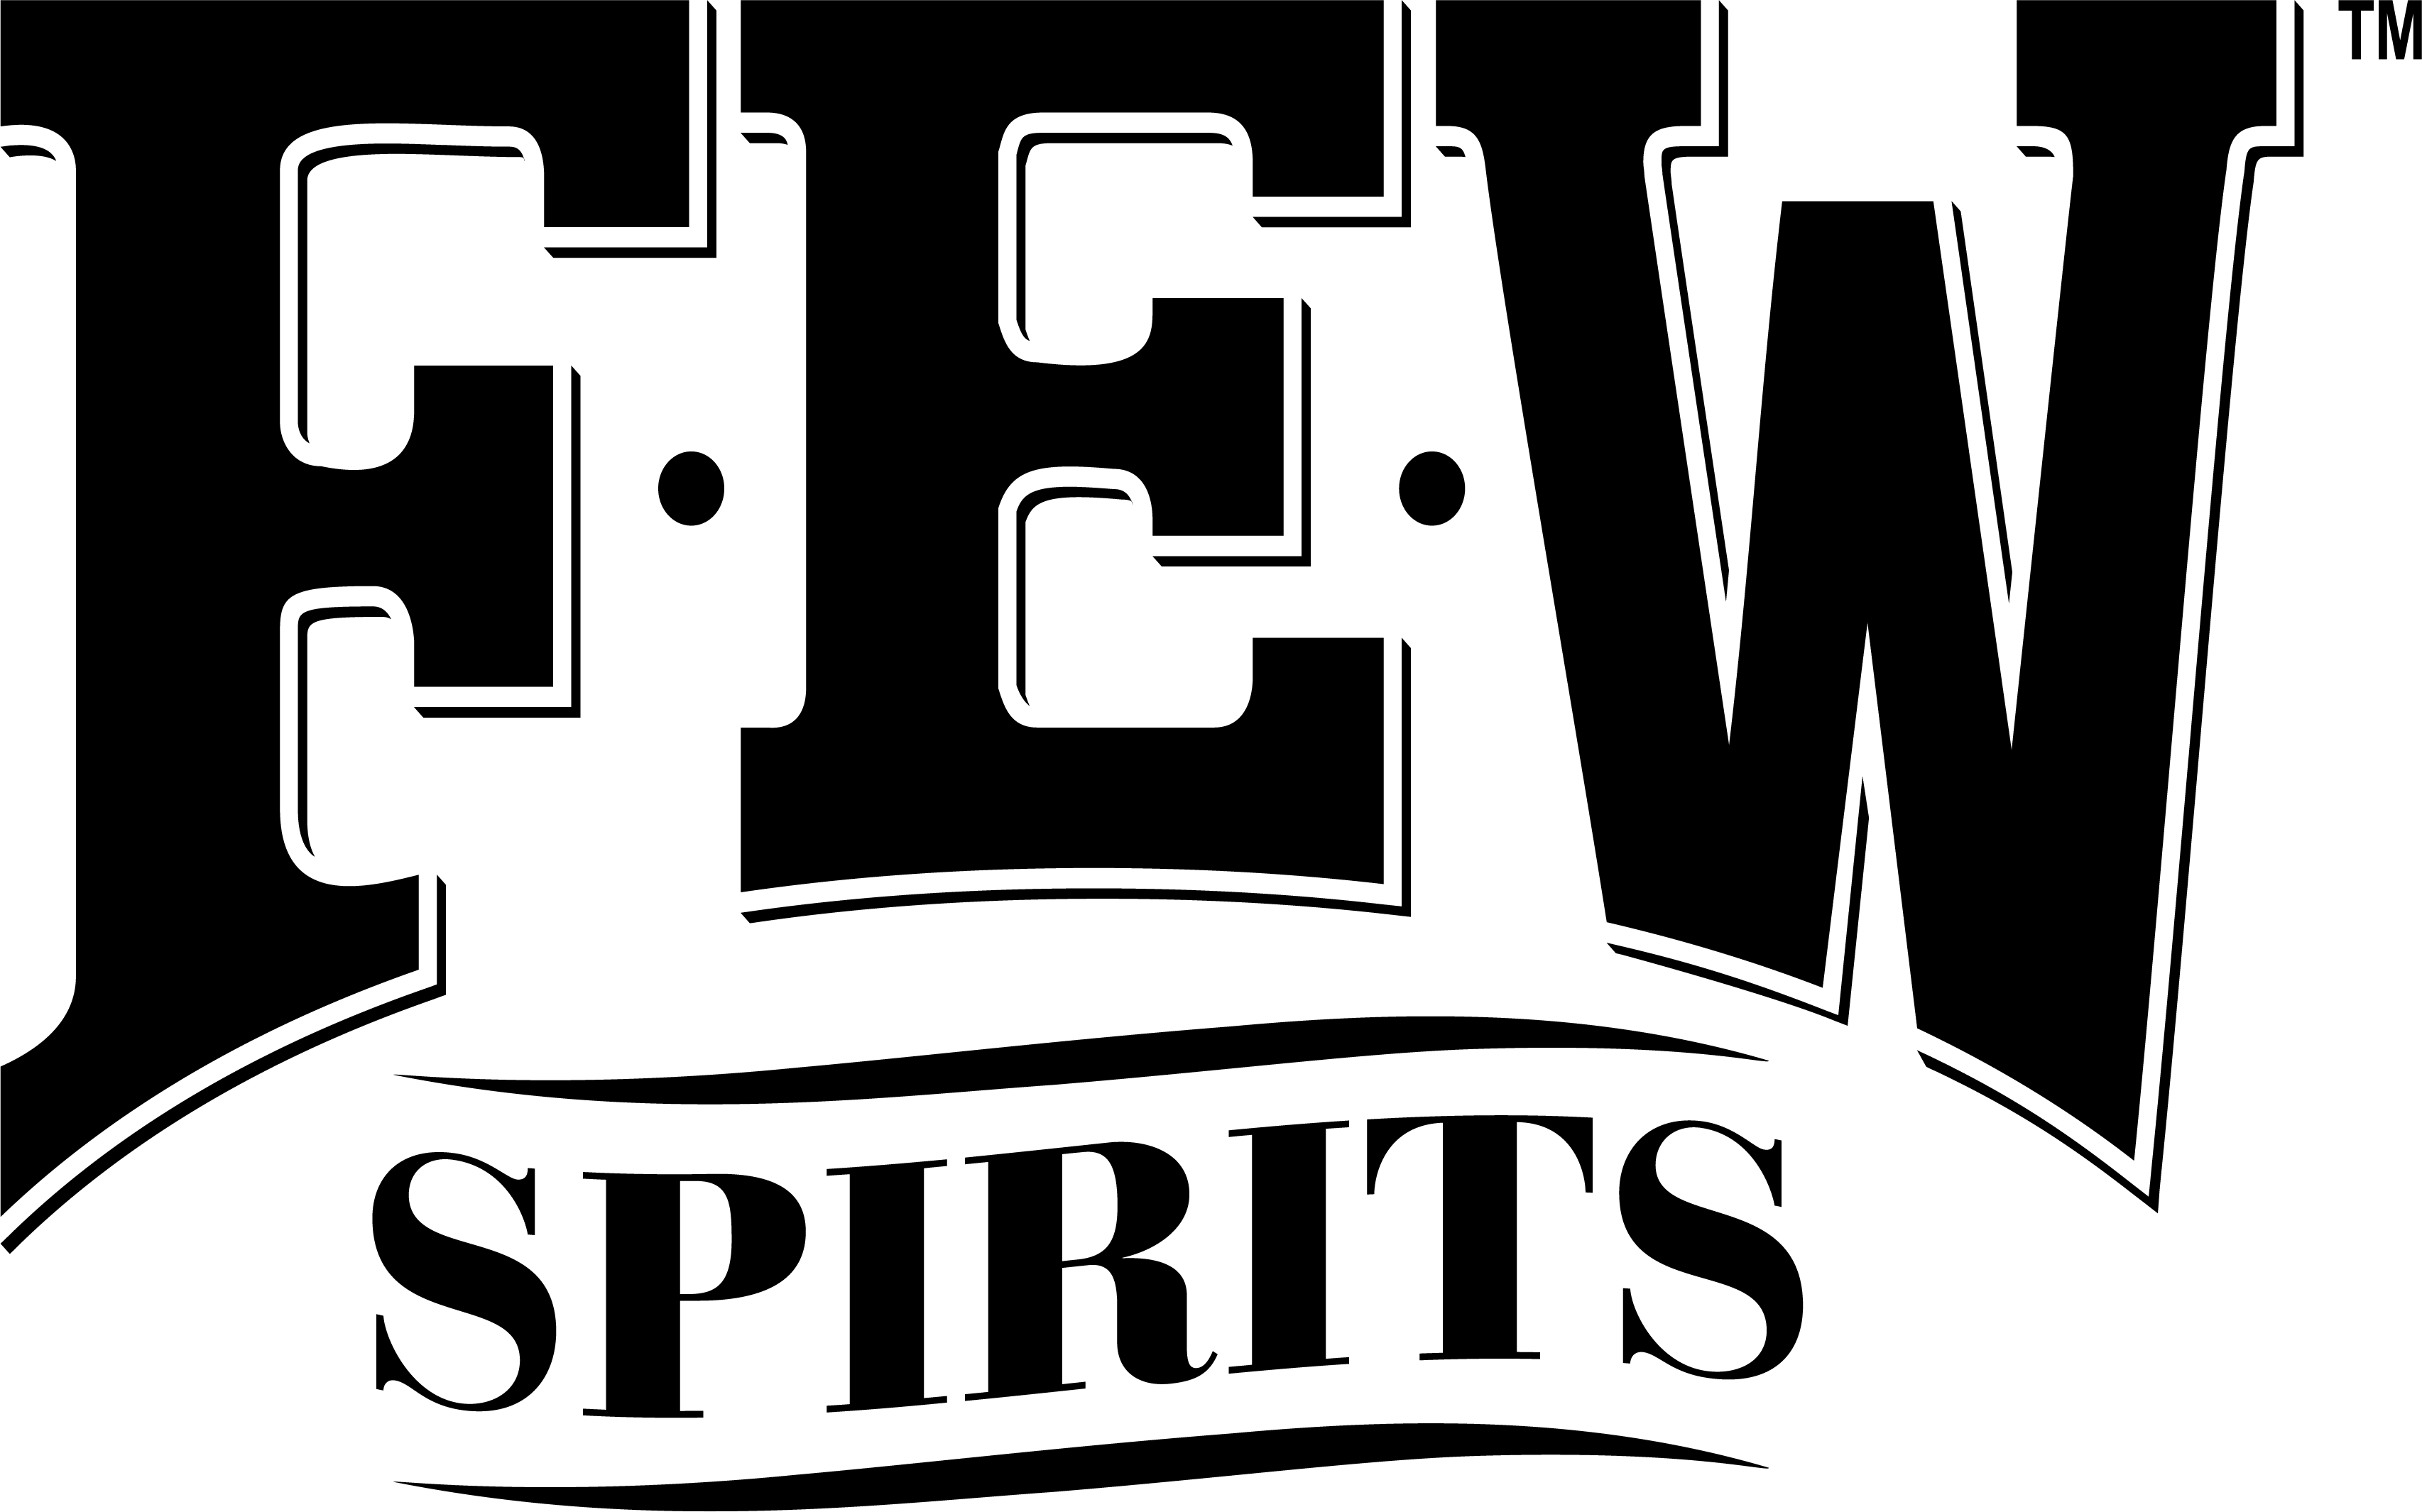 FEW logo black